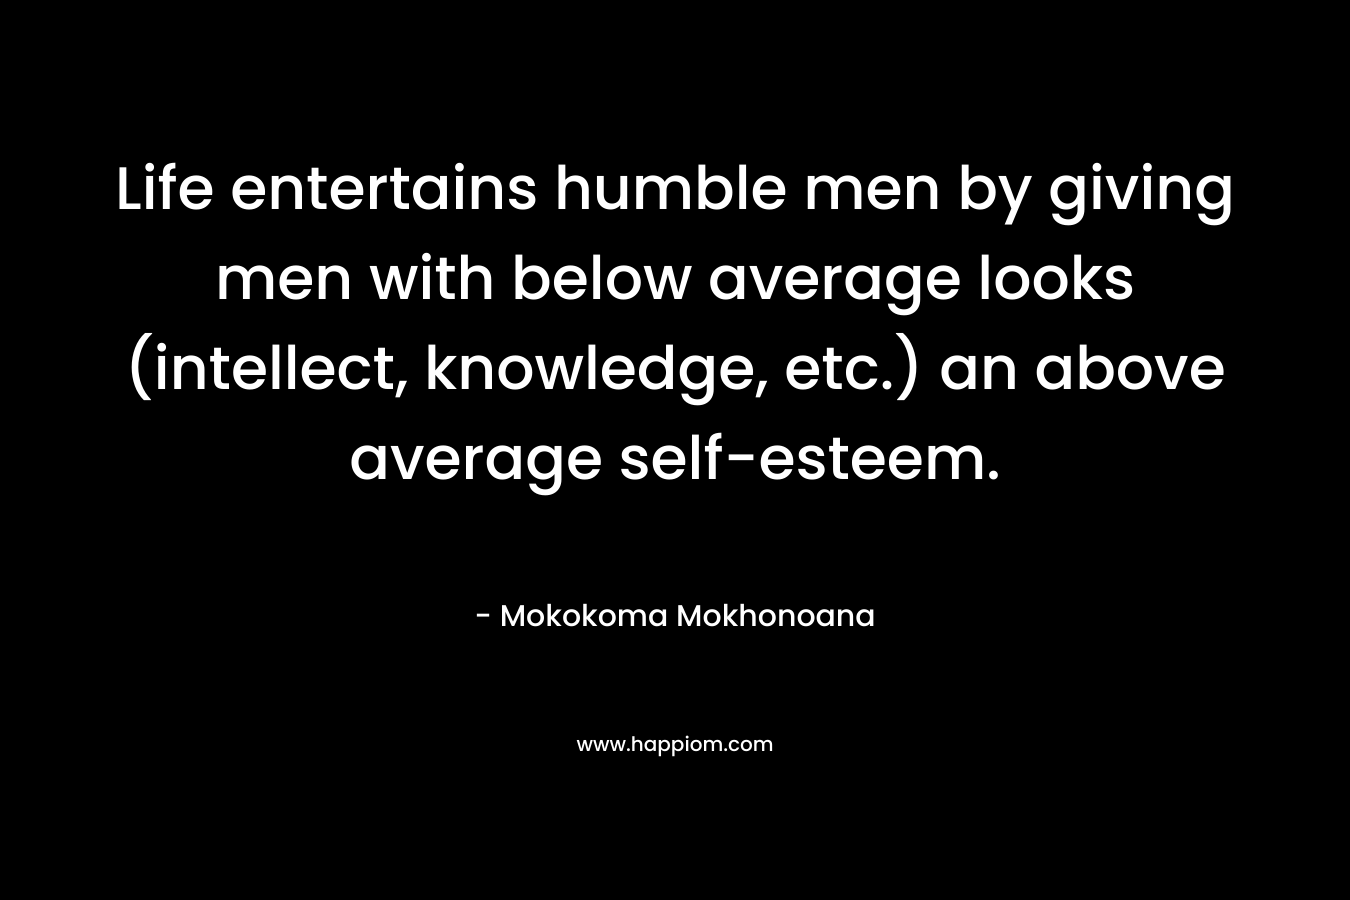 Life entertains humble men by giving men with below average looks (intellect, knowledge, etc.) an above average self-esteem. – Mokokoma Mokhonoana